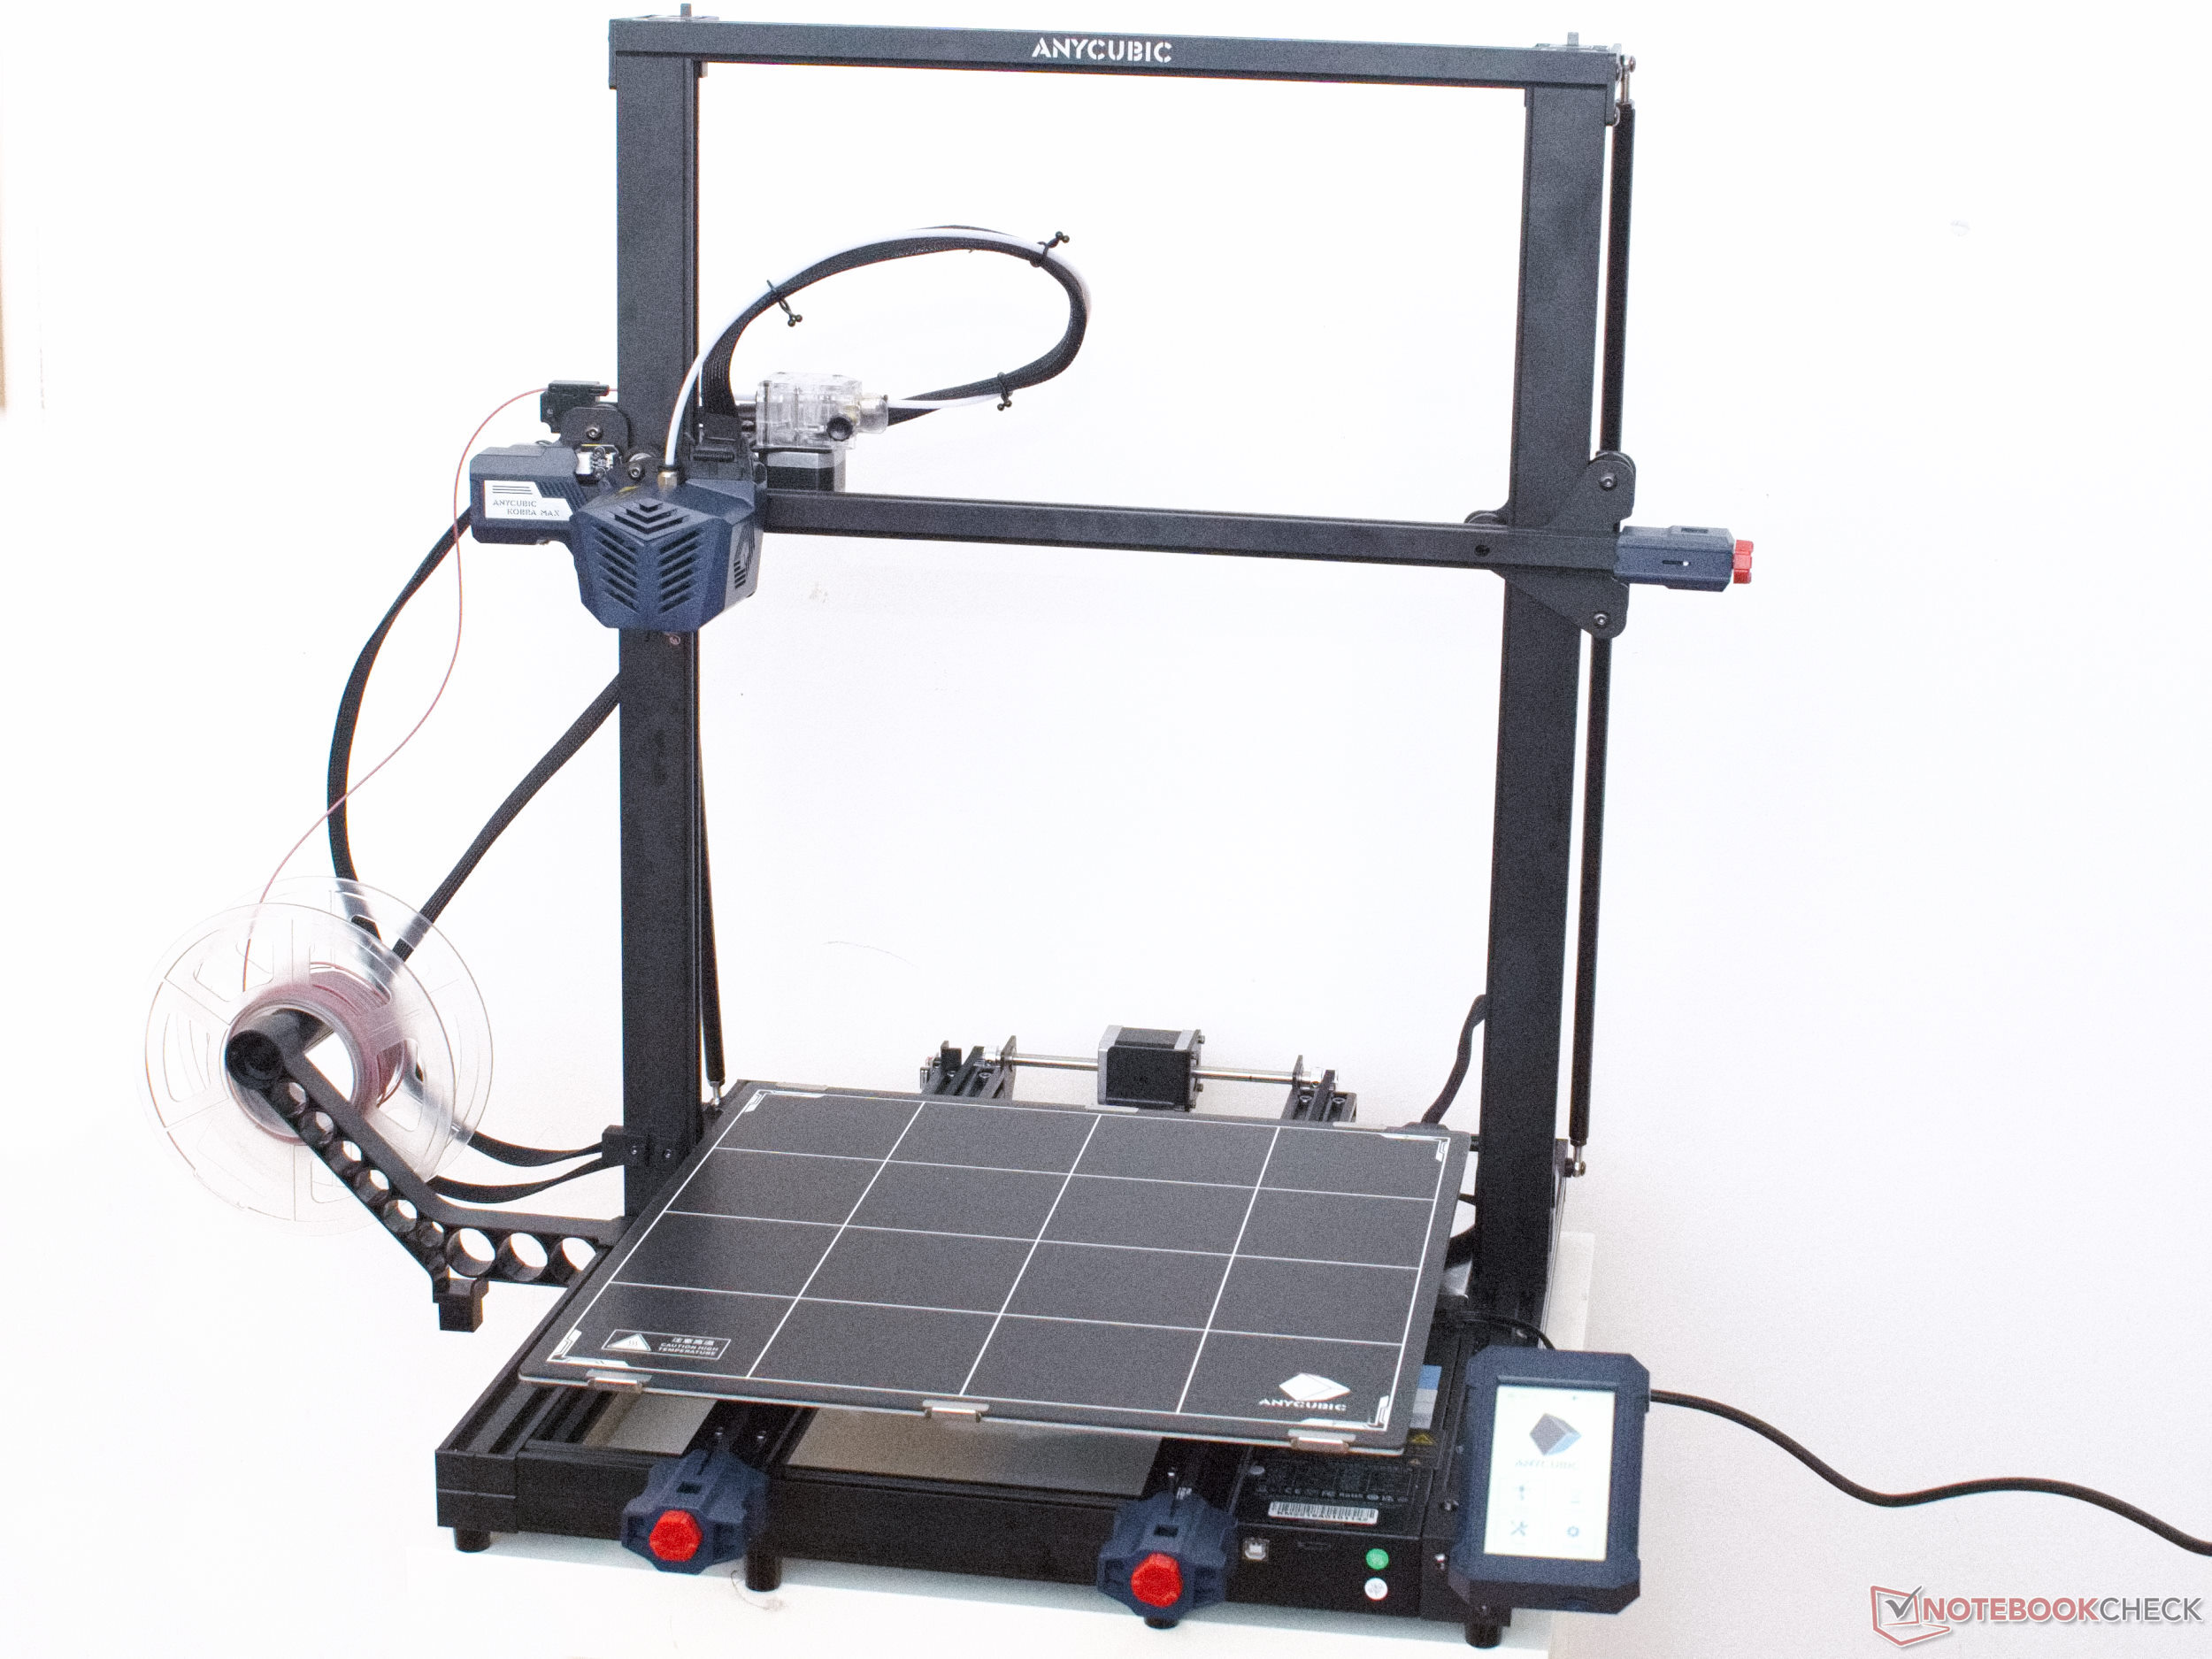 Testing the Anycubic Kobra Max 3D Printer: One huge printer for